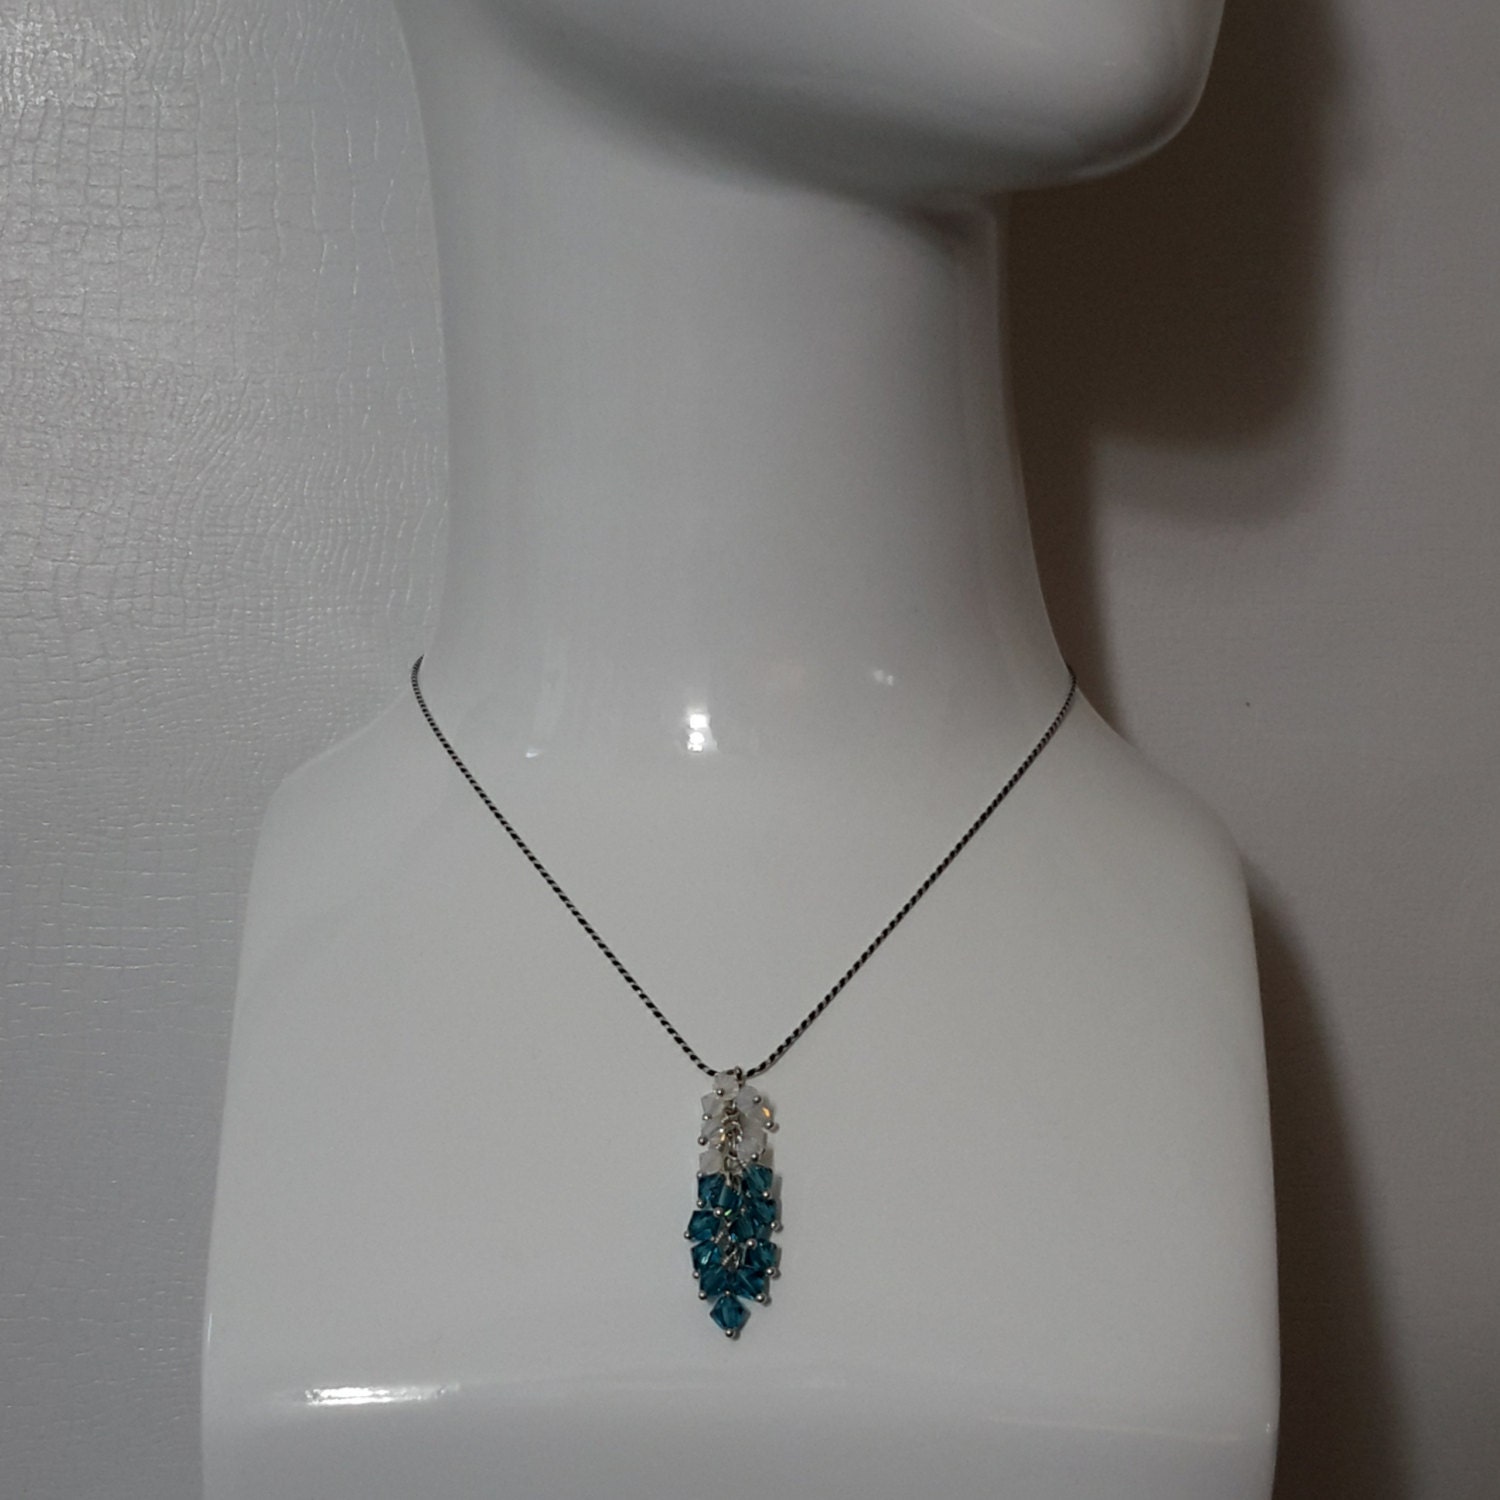 Swarovski Crystals & Sterling Silver Necklace | Etsy